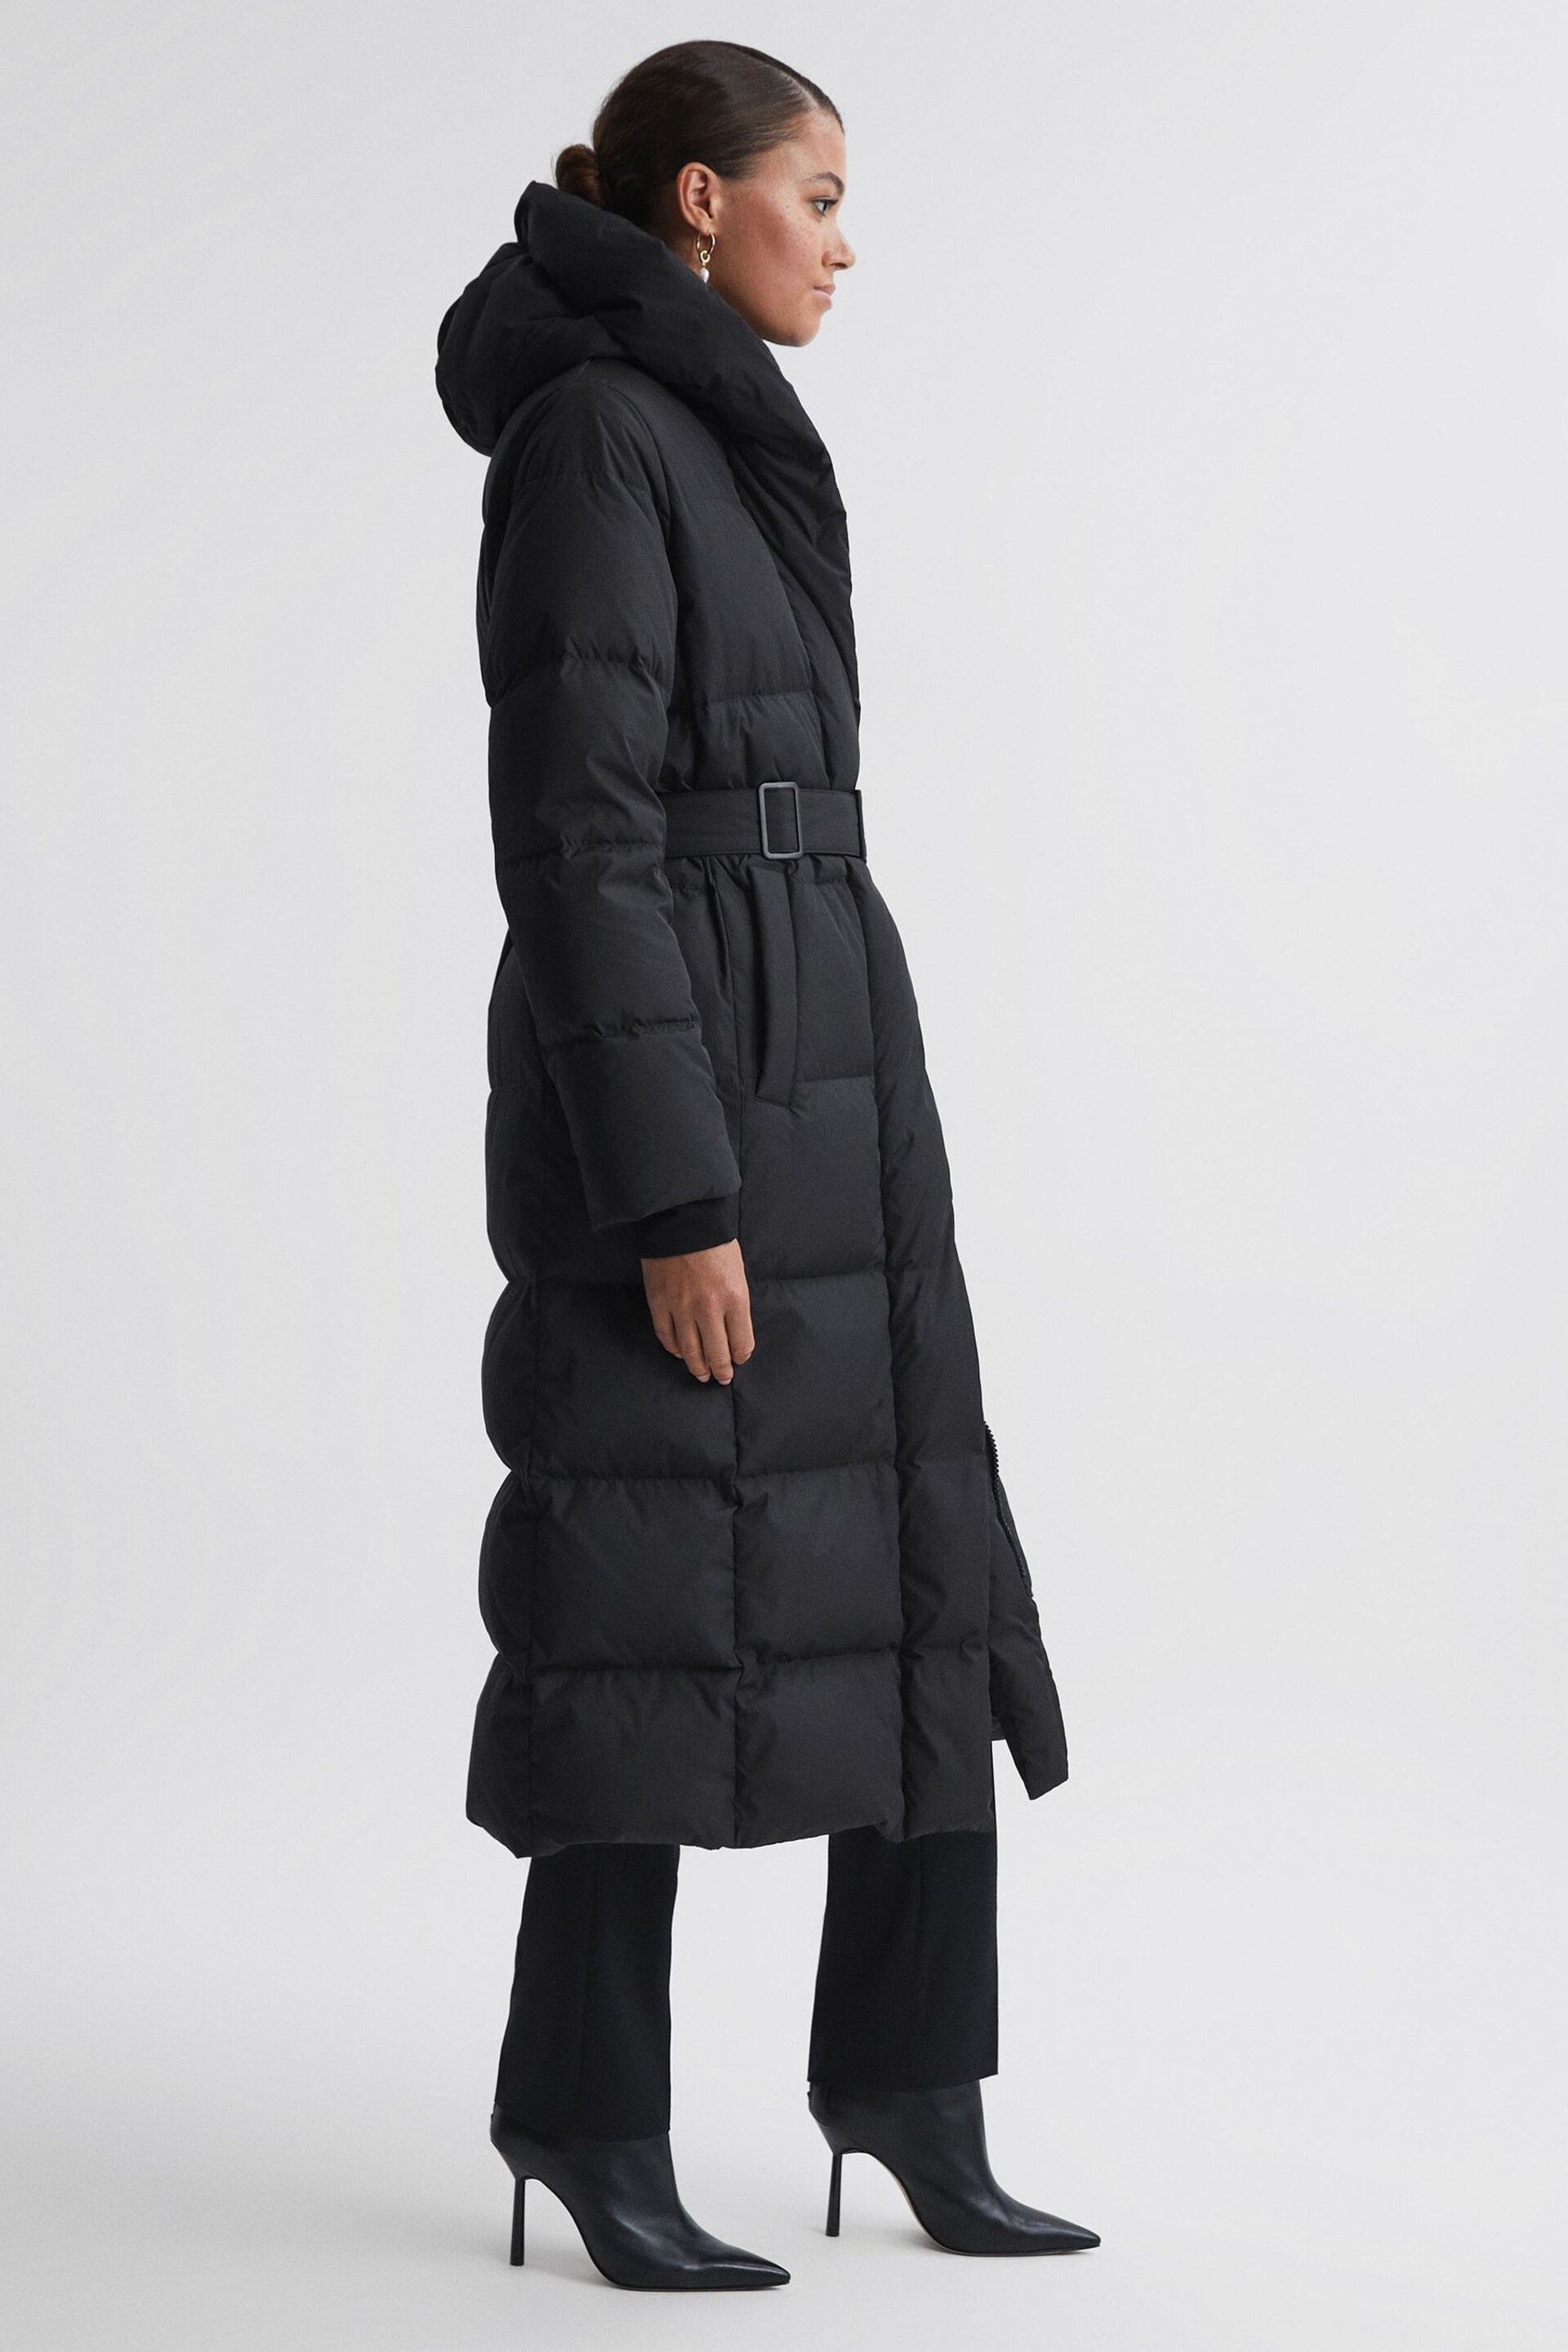 Reiss Black Larissa Long Belted Puffer Coat - Image 4 of 6